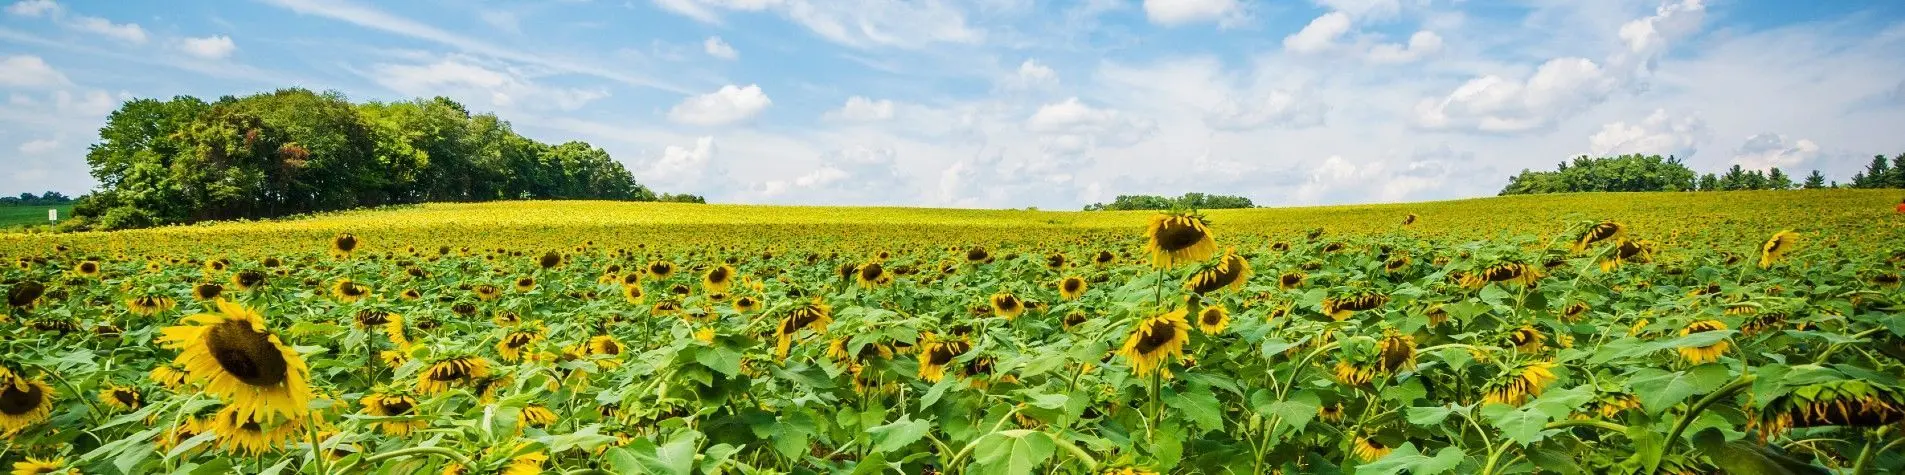 Sunny sunflower field in Harford County, Maryland